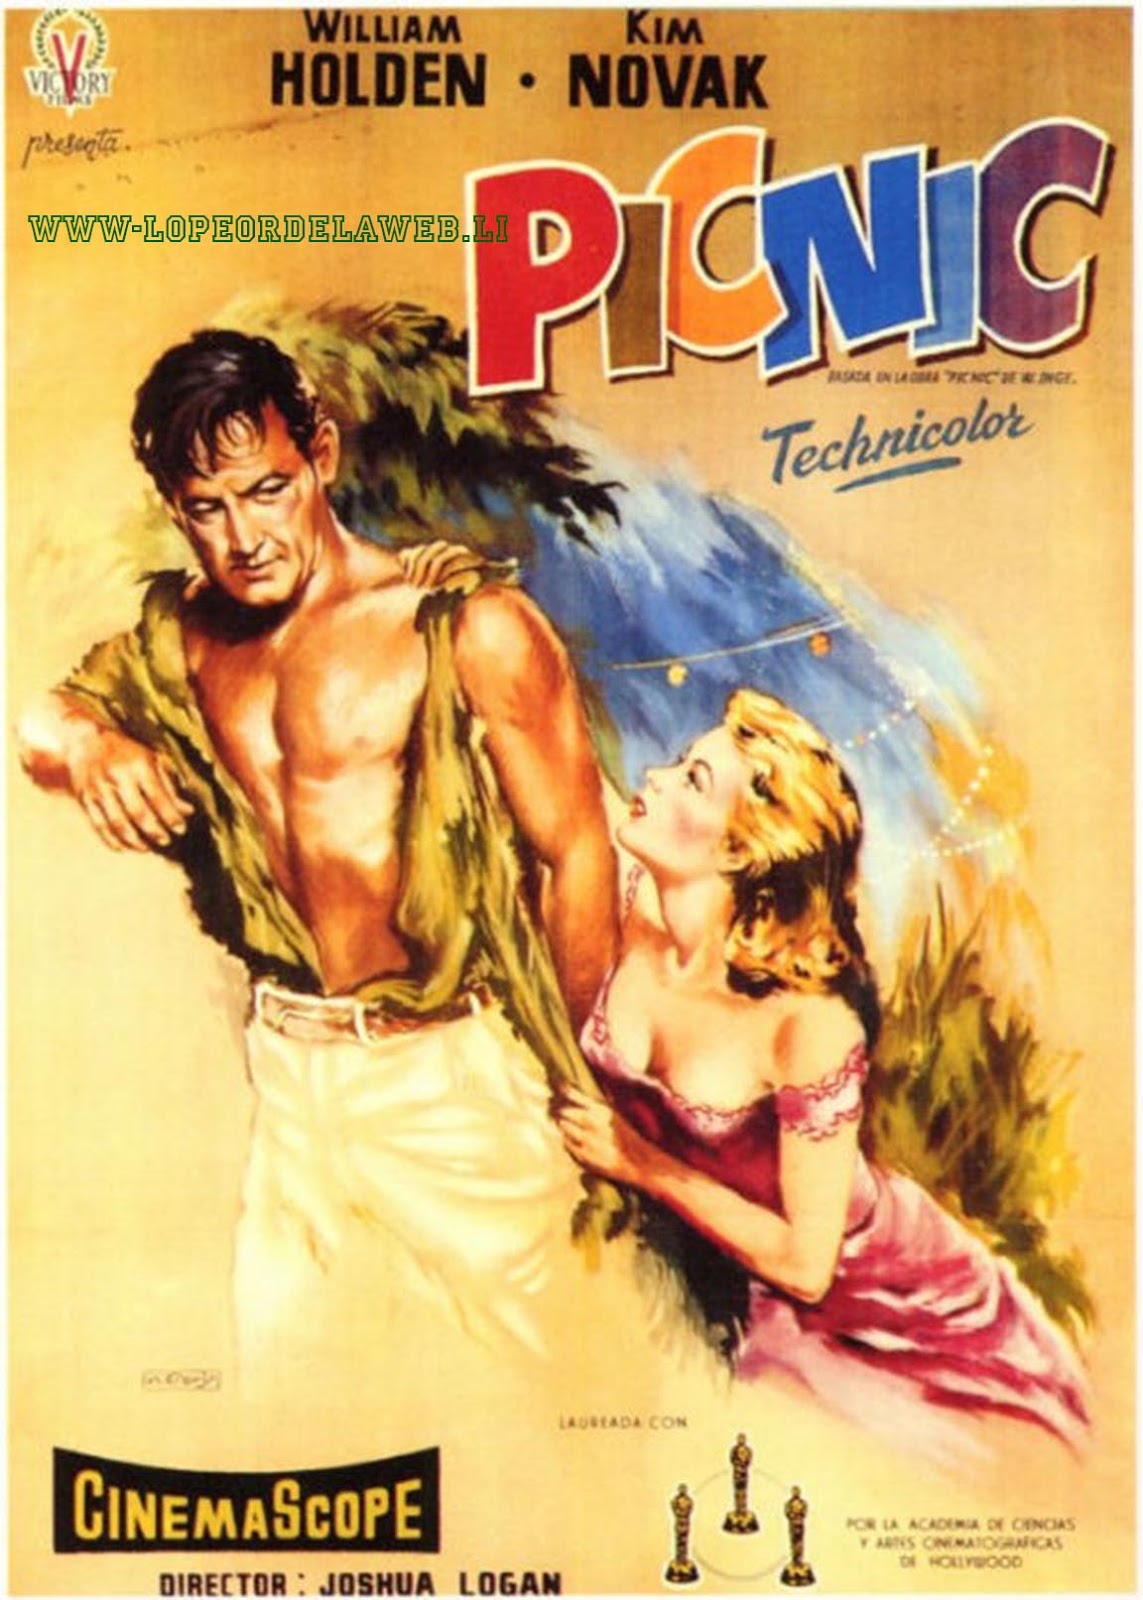 Picnic (1955 / William Holden / Kim Novak)